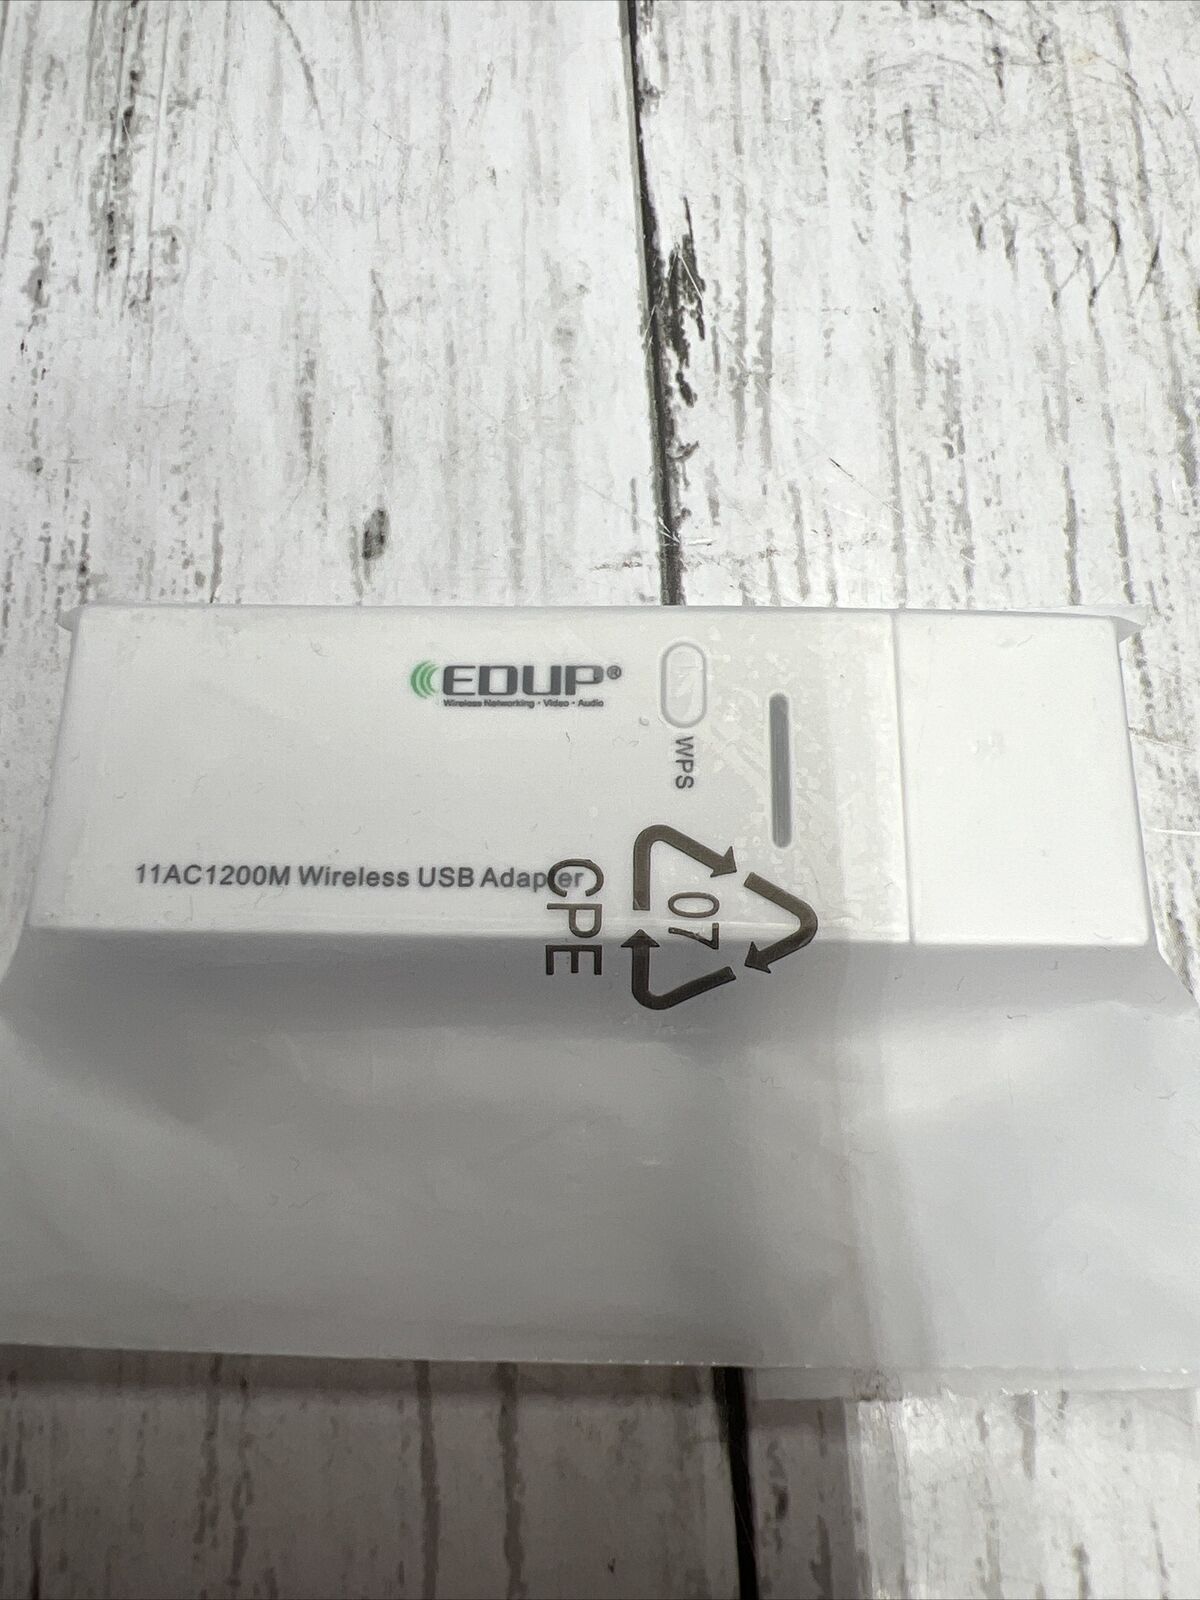 USB 3.0 Wireless Adapter Dual Band AC 802.11AC 300M 5.8g 2.4g EDUP Dongle